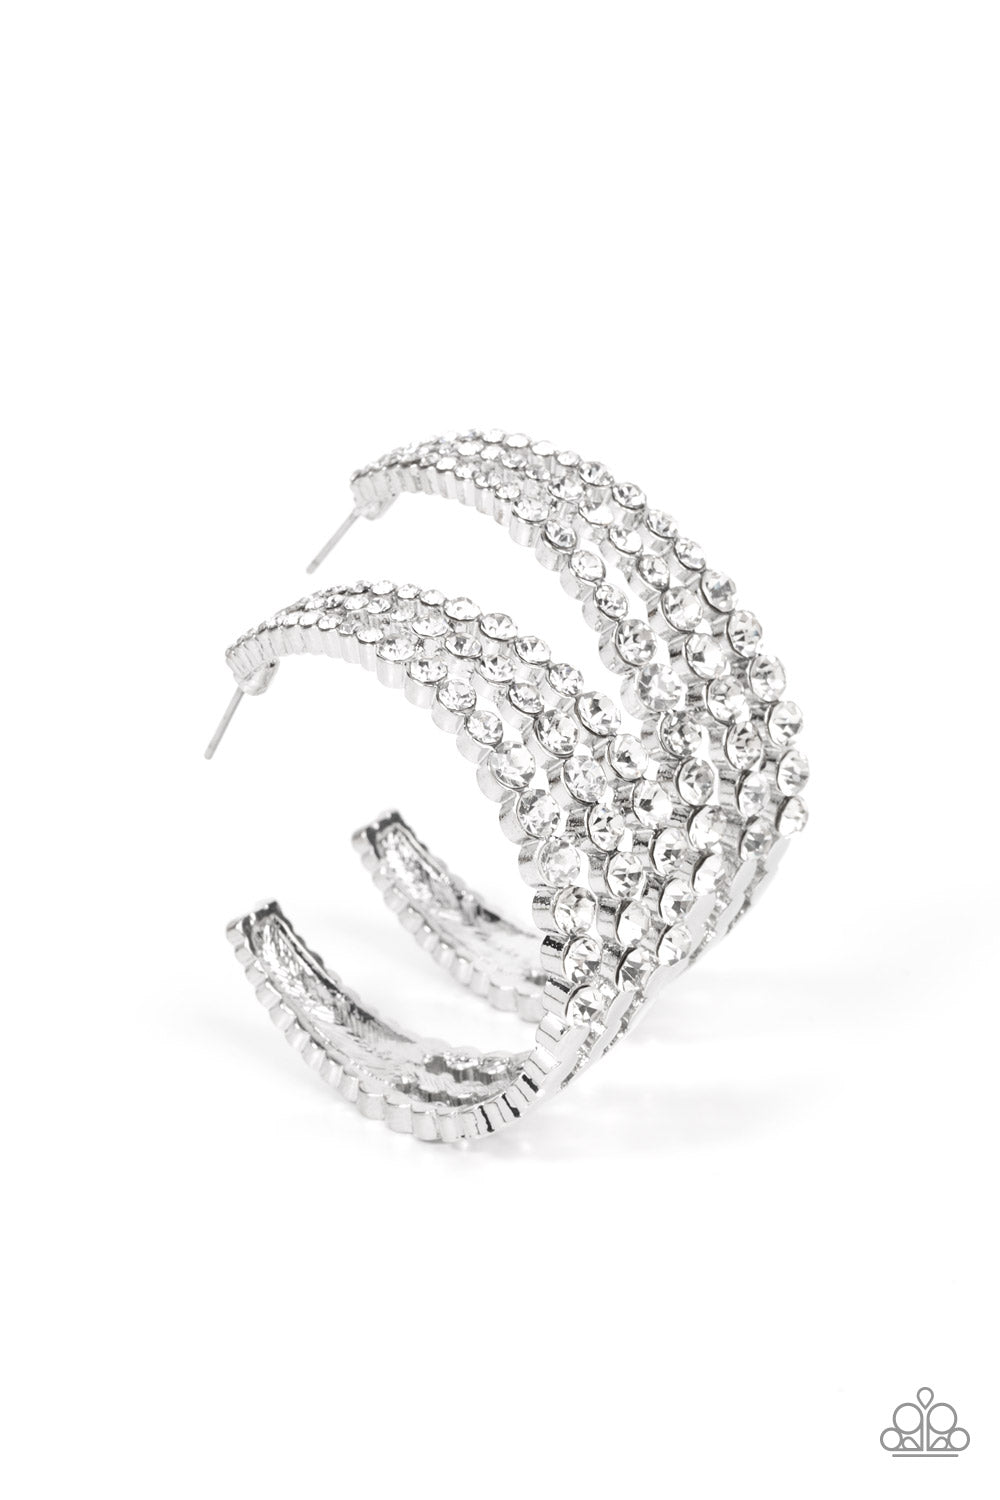 Cosmopolitan Cool White Rhinestone Hoop Earrings - Paparazzi Accessories- lightbox - CarasShop.com - $5 Jewelry by Cara Jewels